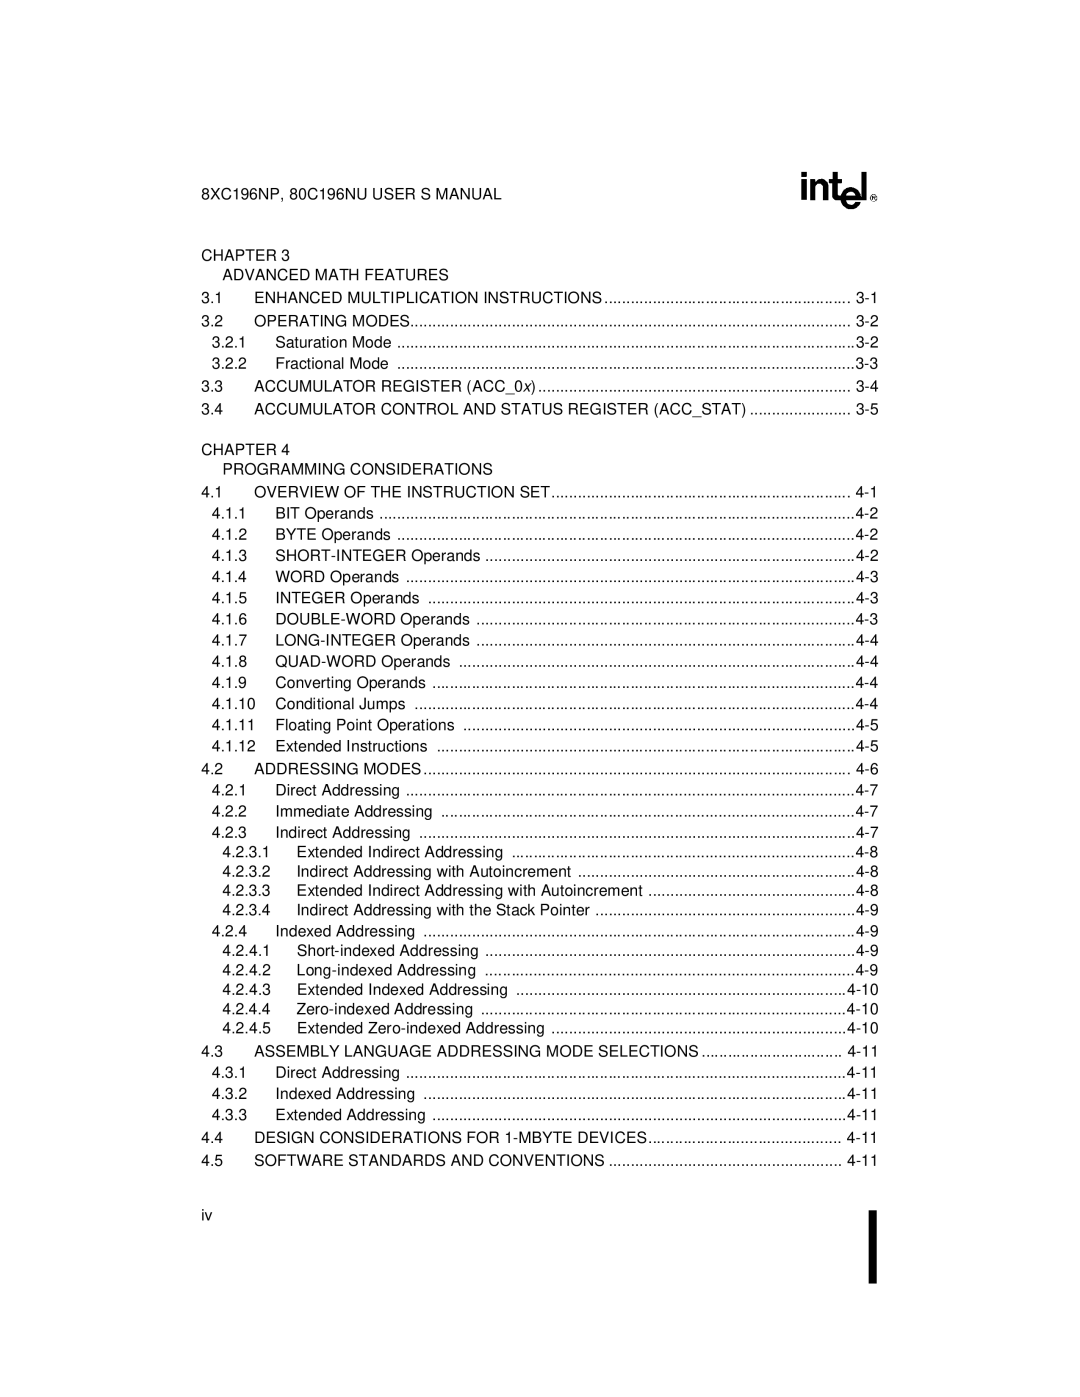 Intel Microcontroller, 80C196NU, 8XC196NP manual Chapter Programming Considerations 